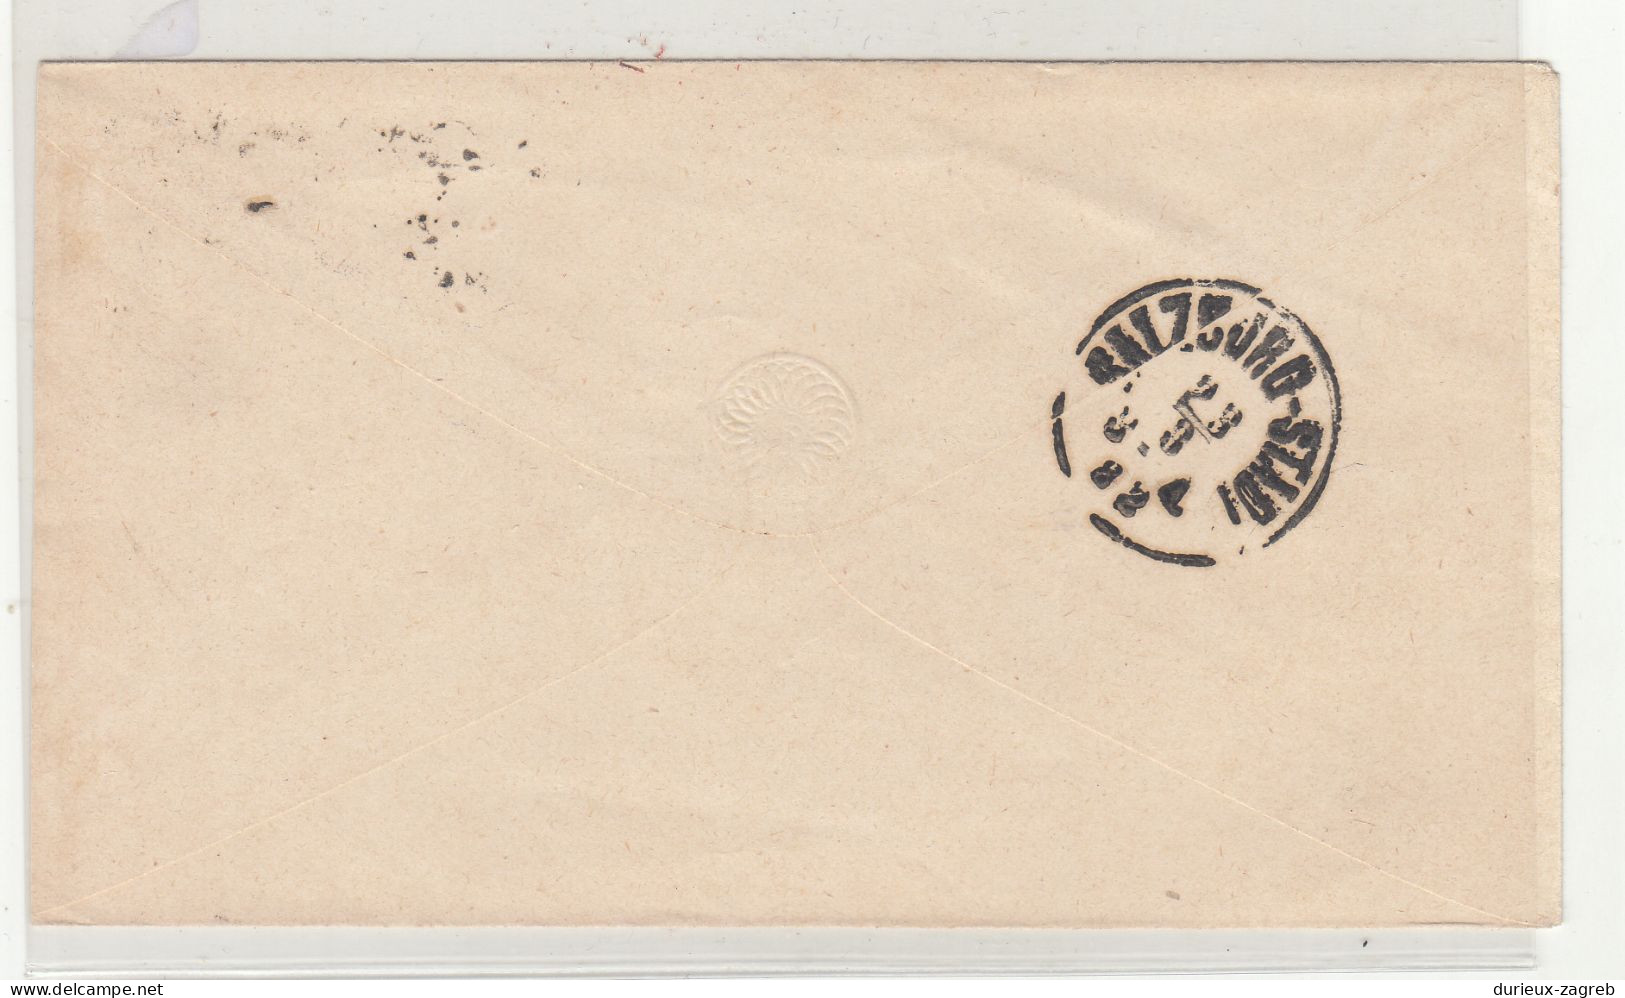 Austria Postal Stationery Letter Cover Posted 1882 B240401 - Enveloppes